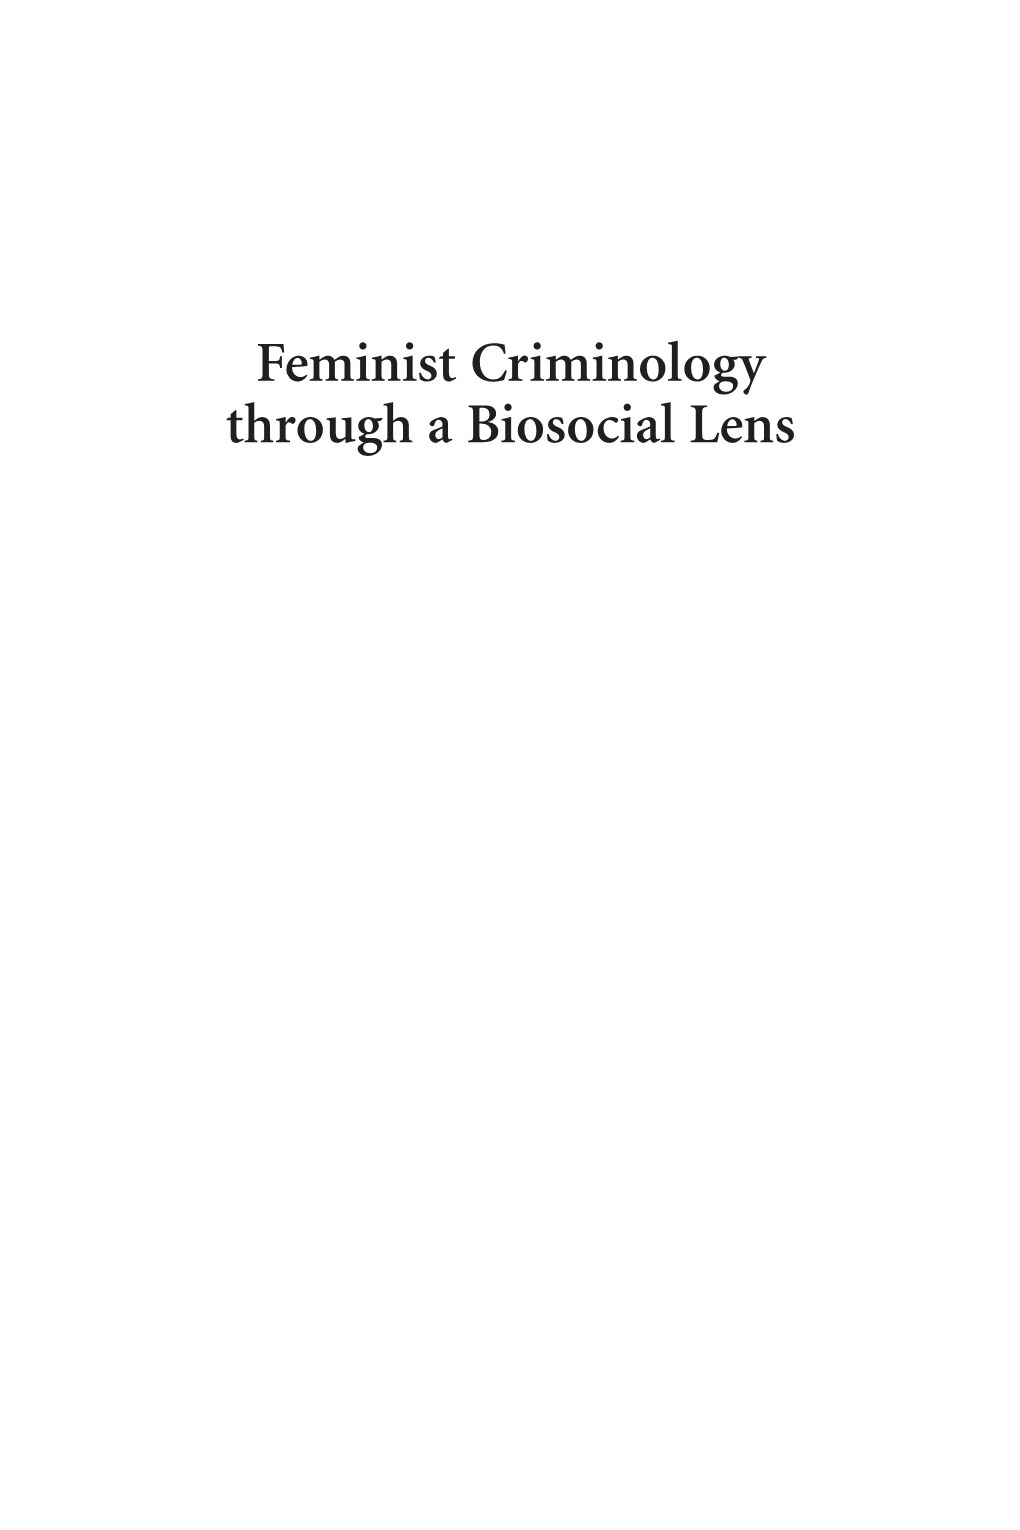 Feminist Criminology Through a Biosocial Lens Walsh Vaske 00 Fmt Auto 6/25/15 11:00 AM Page Ii Walsh Vaske 00 Fmt Auto 6/25/15 11:00 AM Page Iii